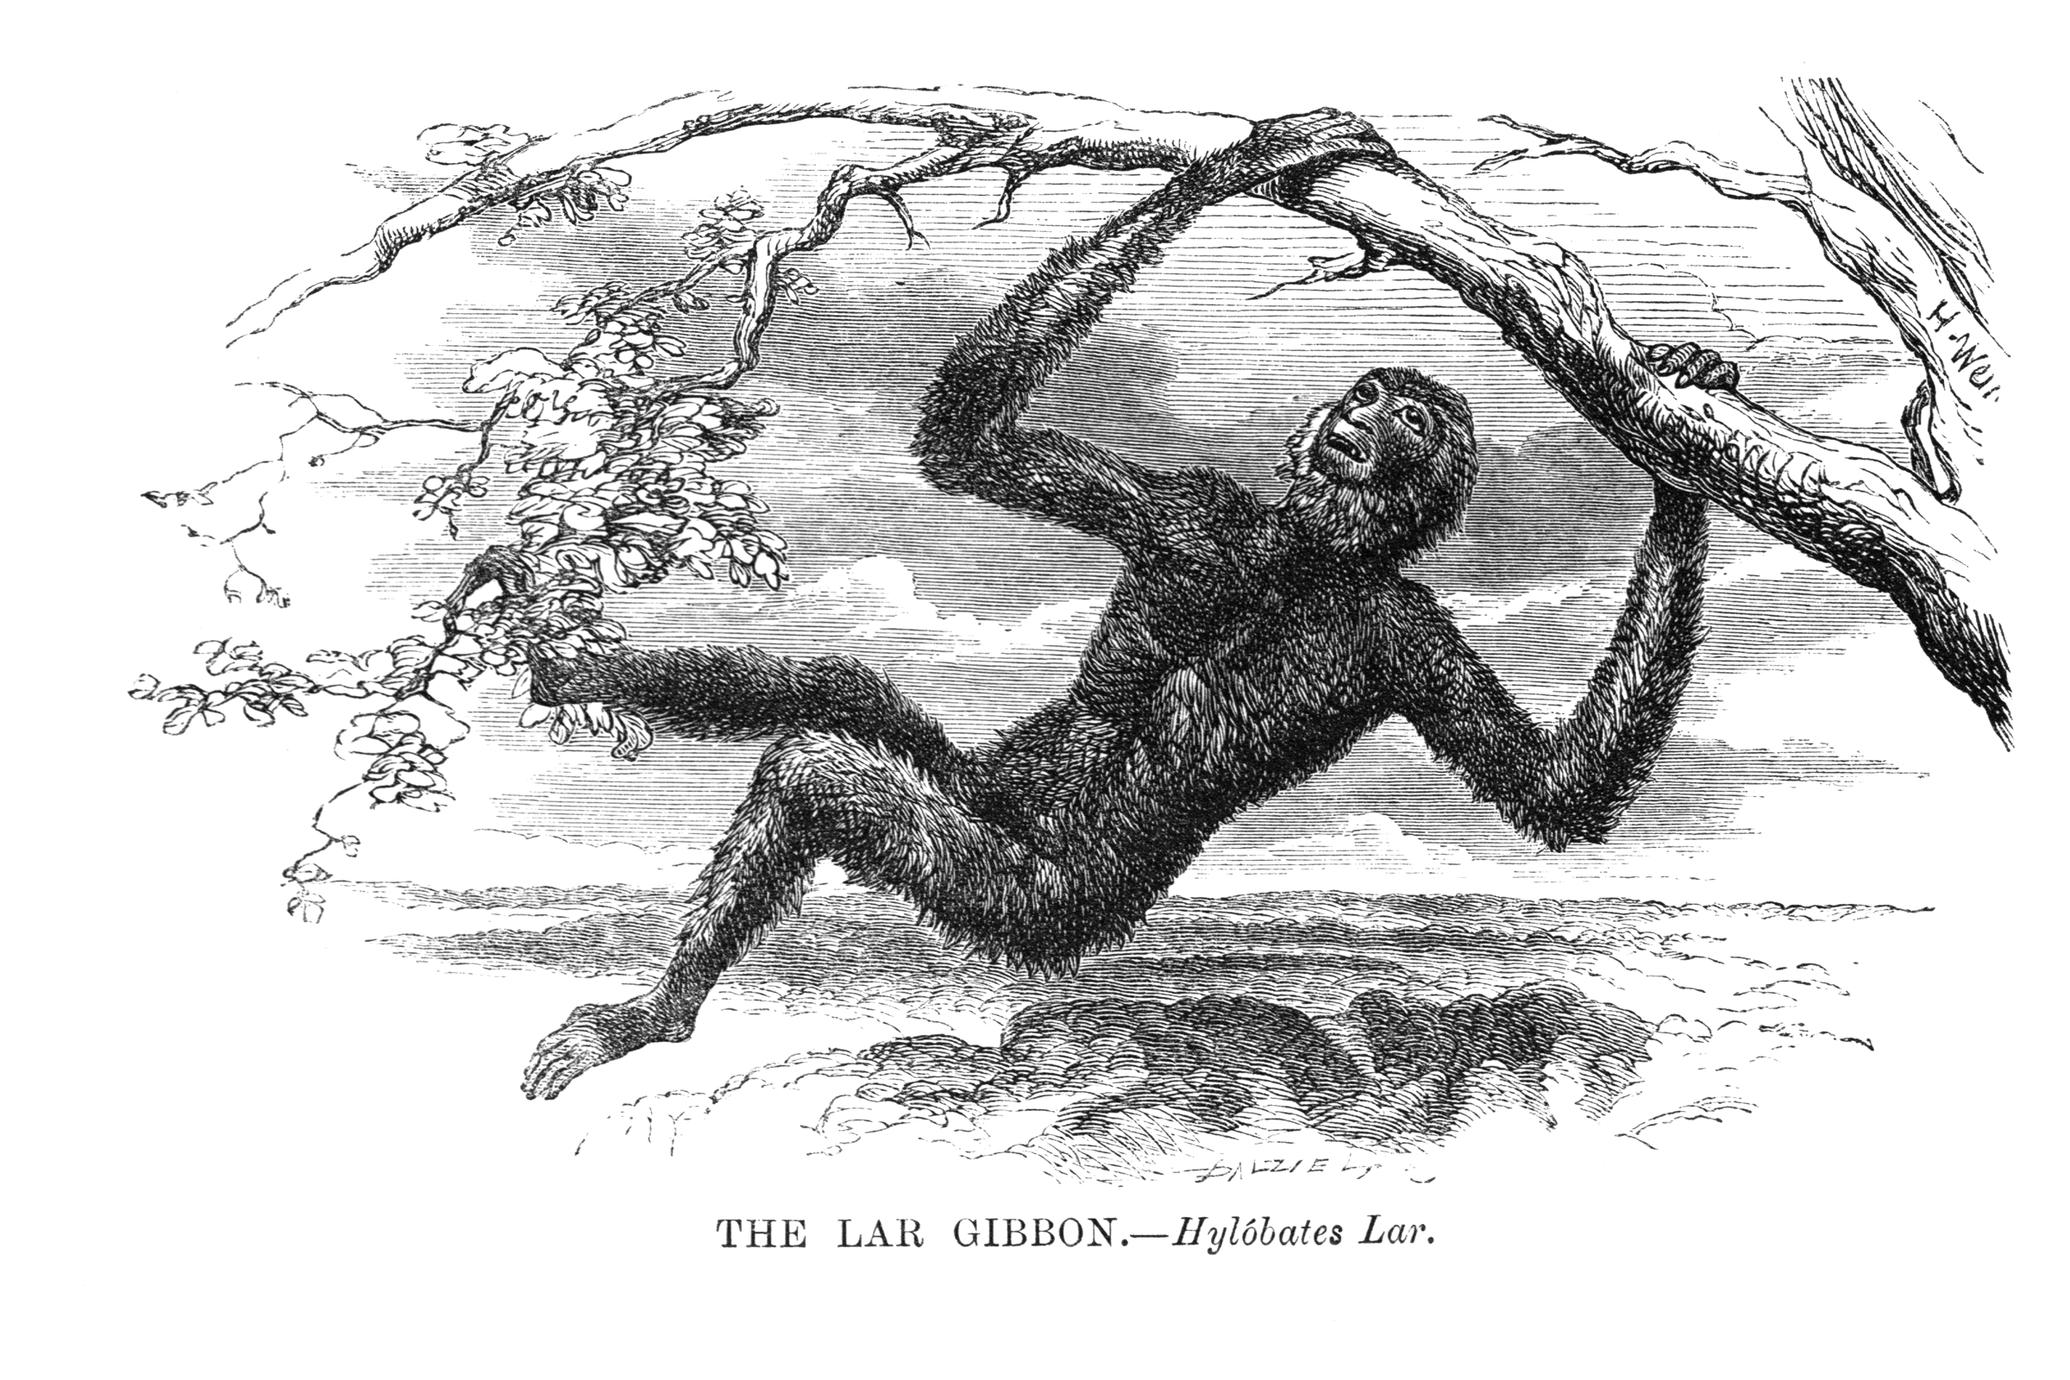 The Lar Gibbon